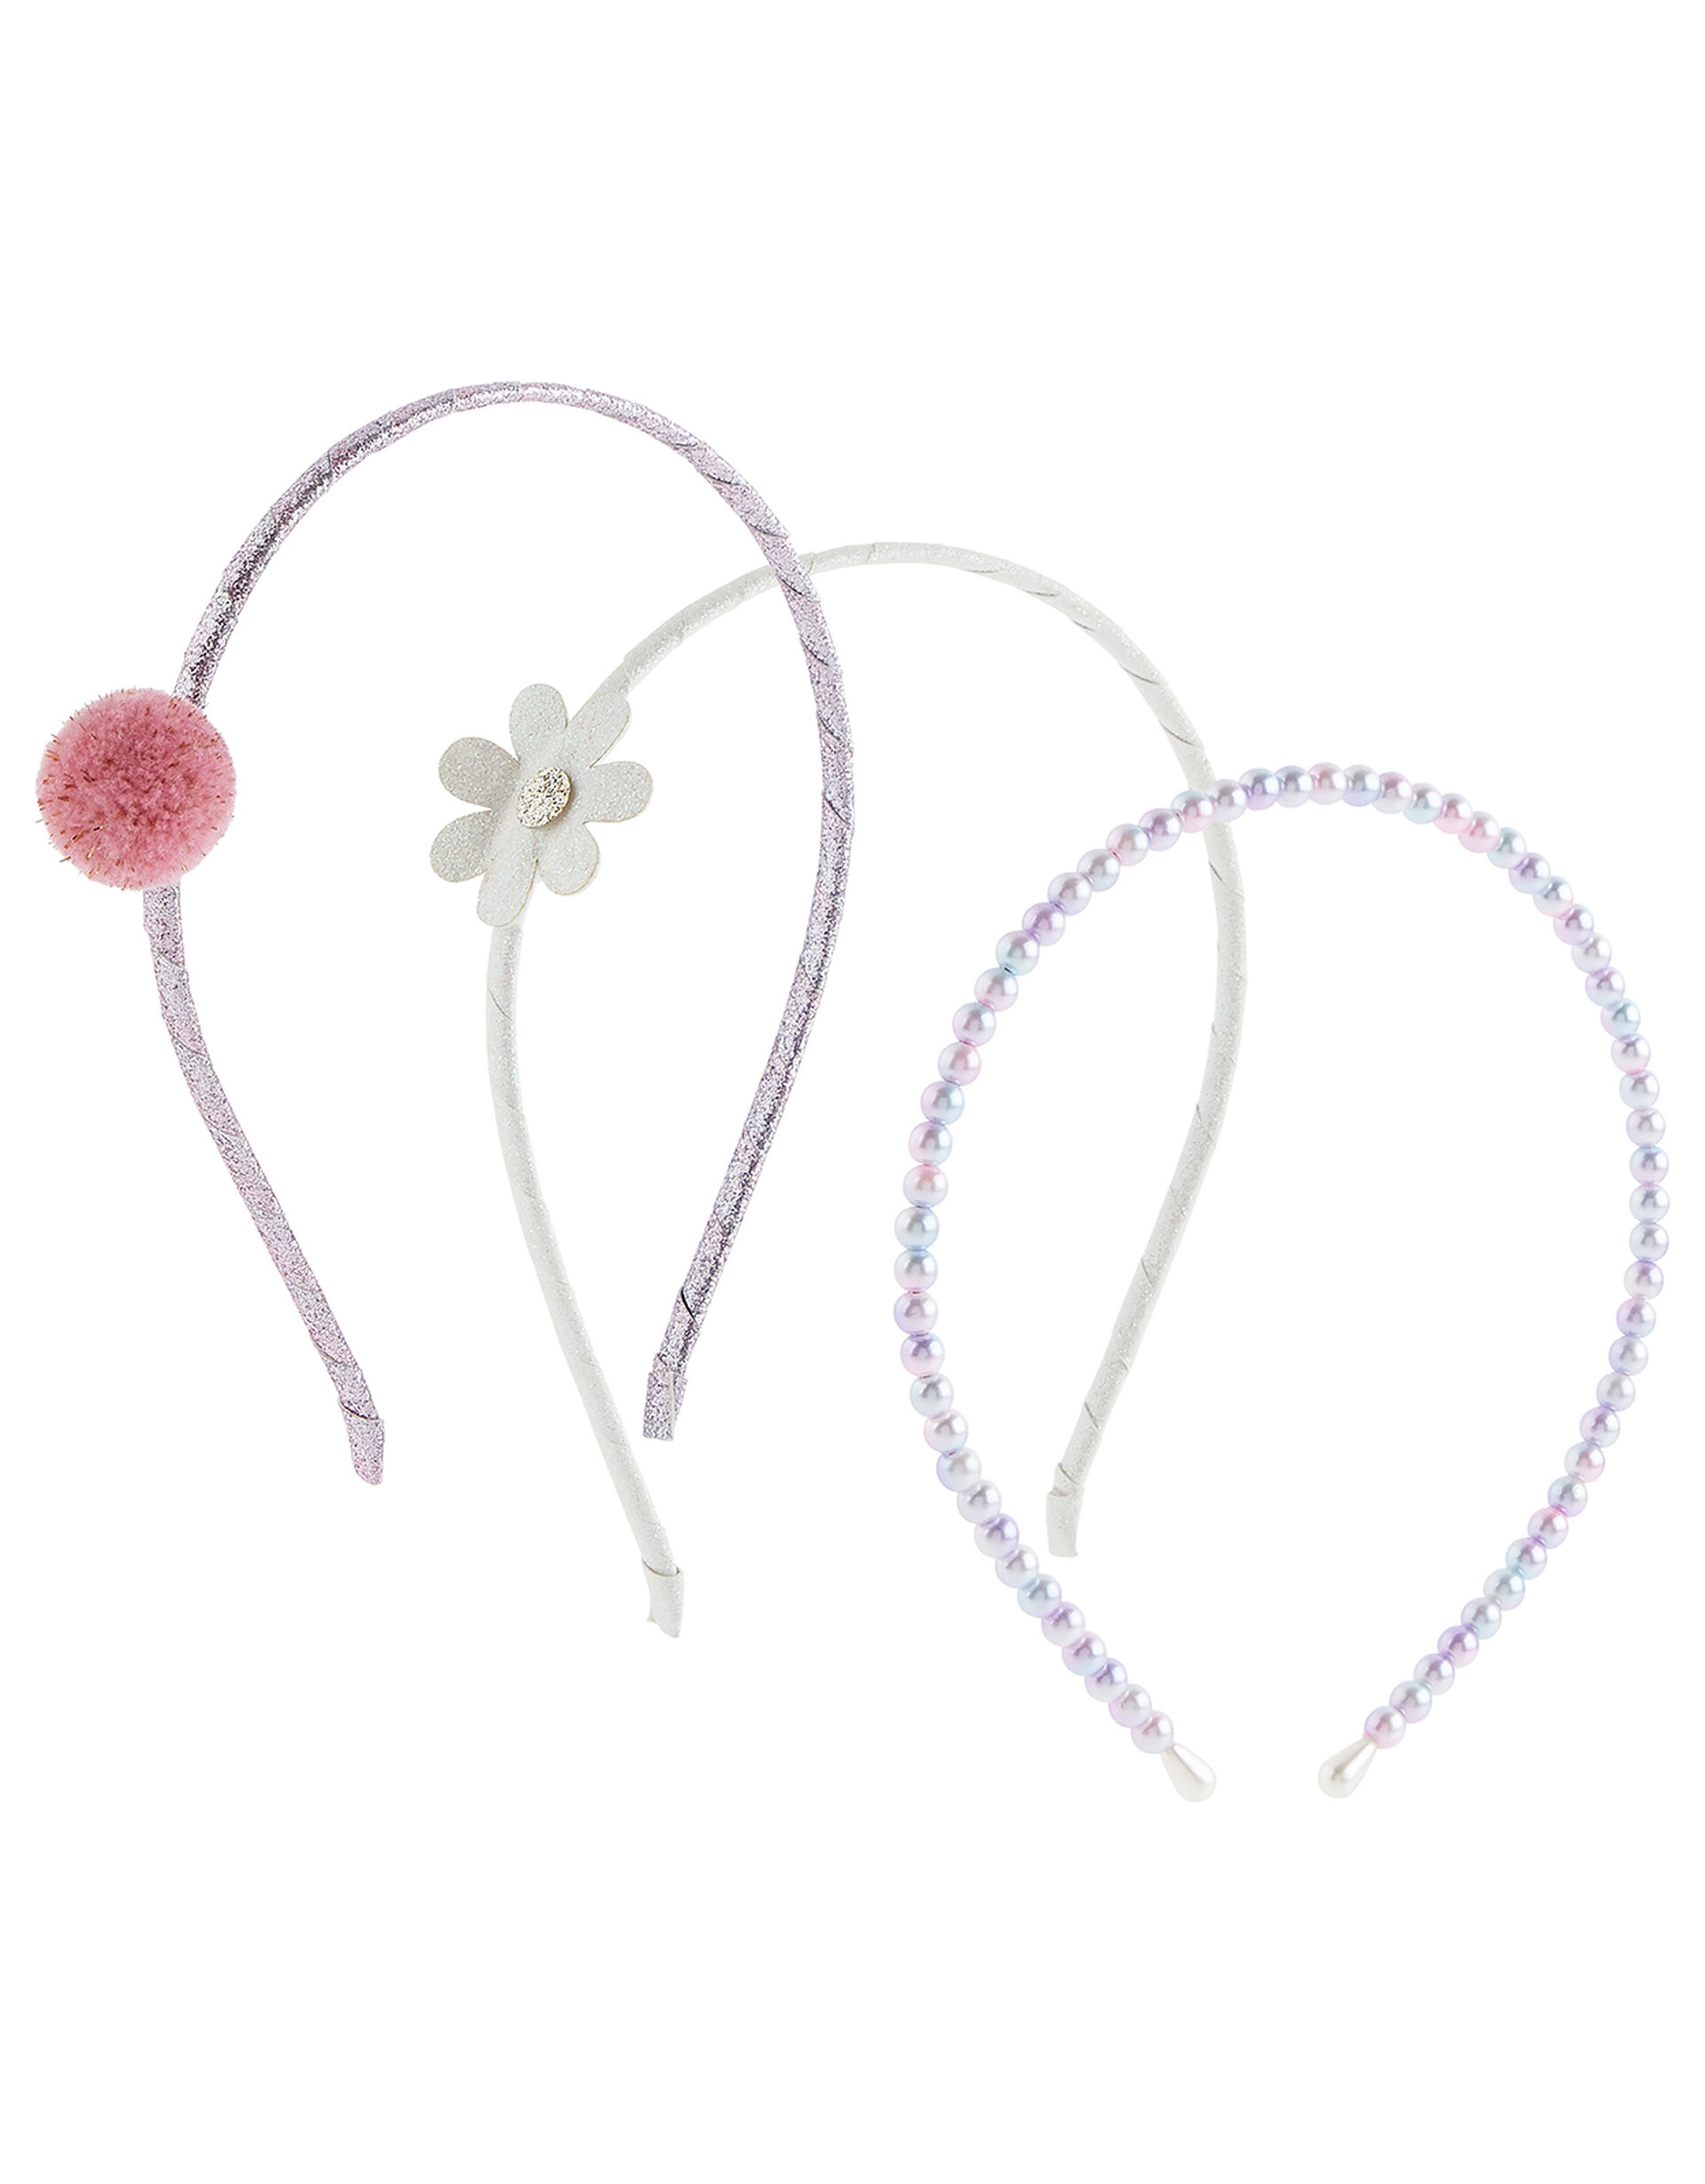 Pearl, Flower and Pom-Pom Headband Set, , large